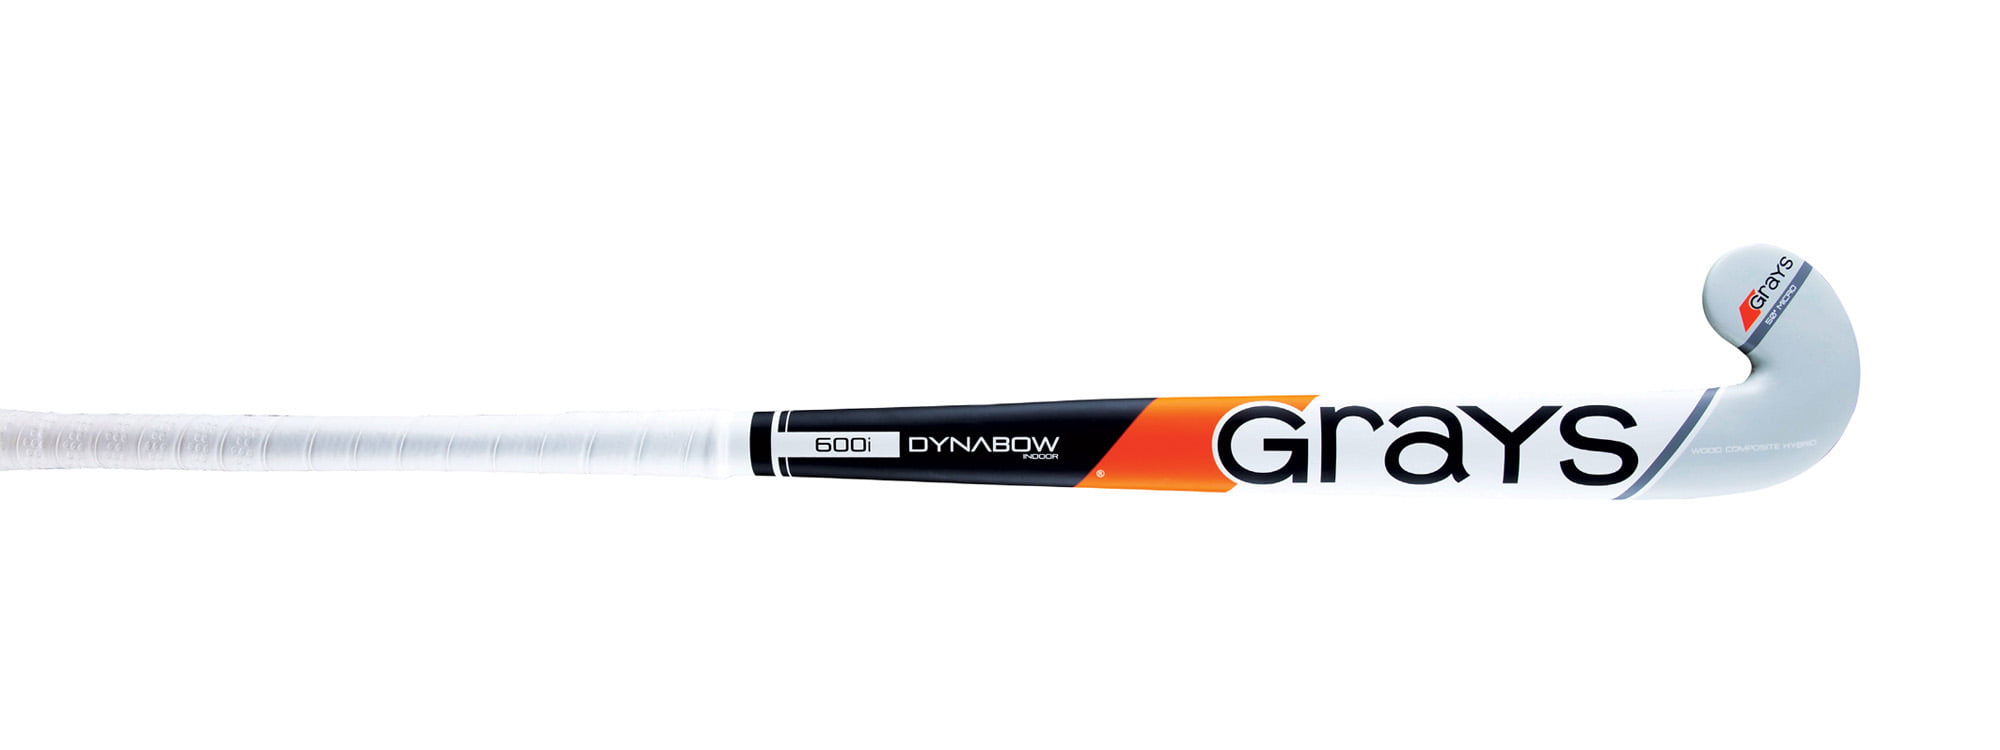 32 GRAYS 1066286 600i Dynabow Indoor Field Hockey Stick Size Gray//White//Black